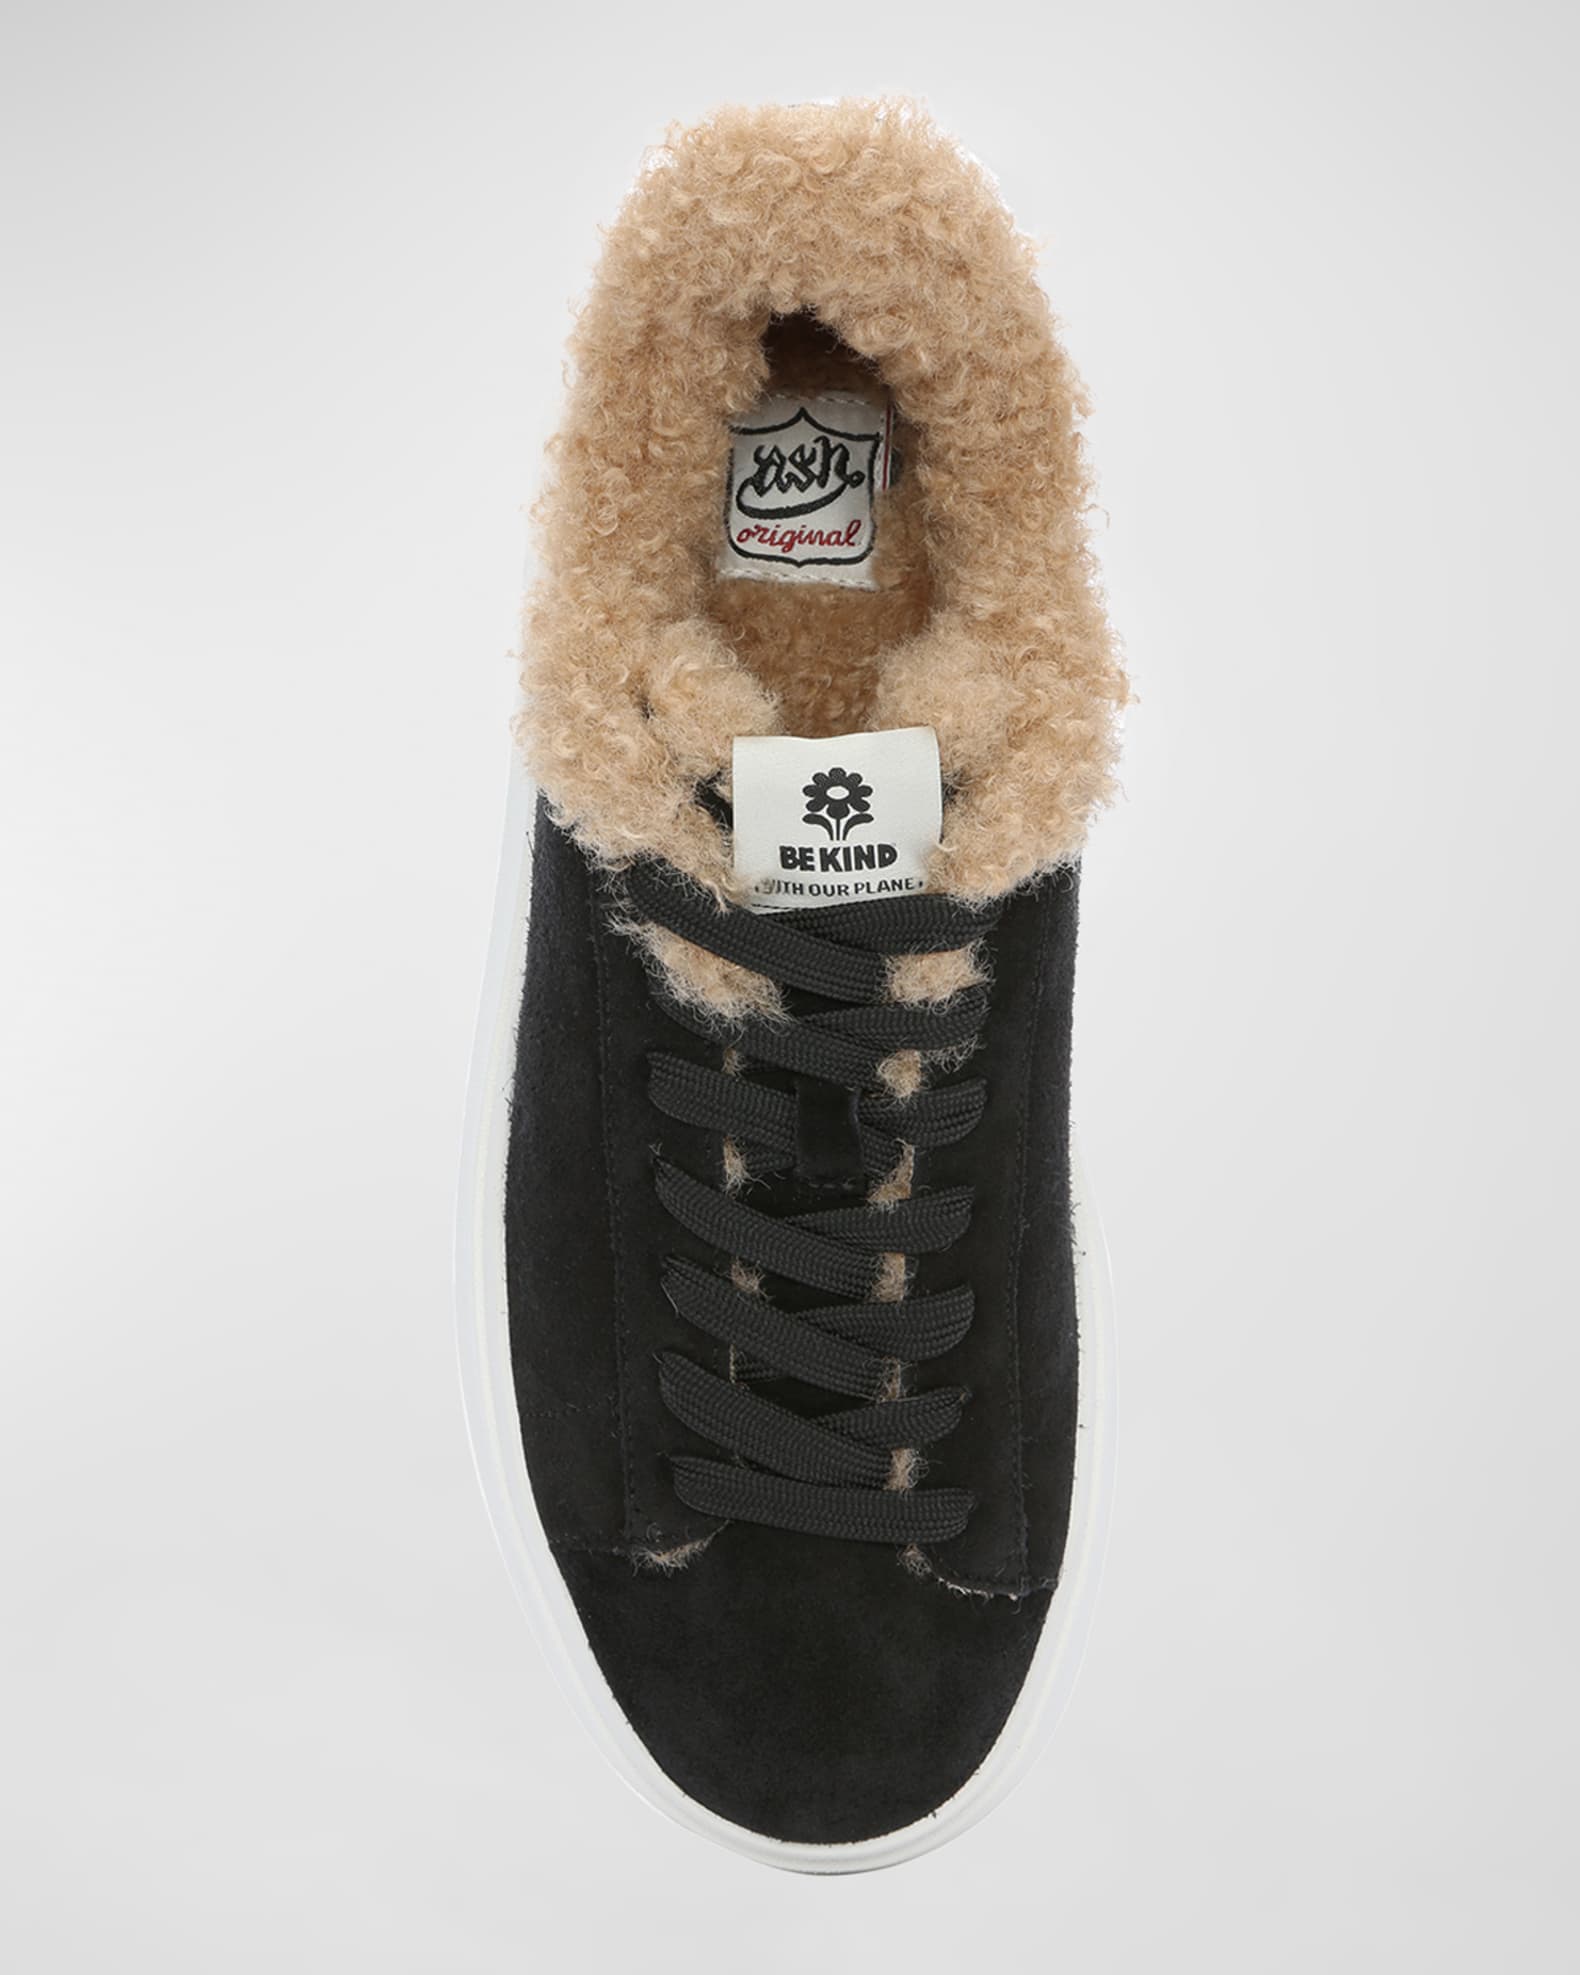 Ash Moby Be Kind Faux Fur Flatform Sneakers | Neiman Marcus